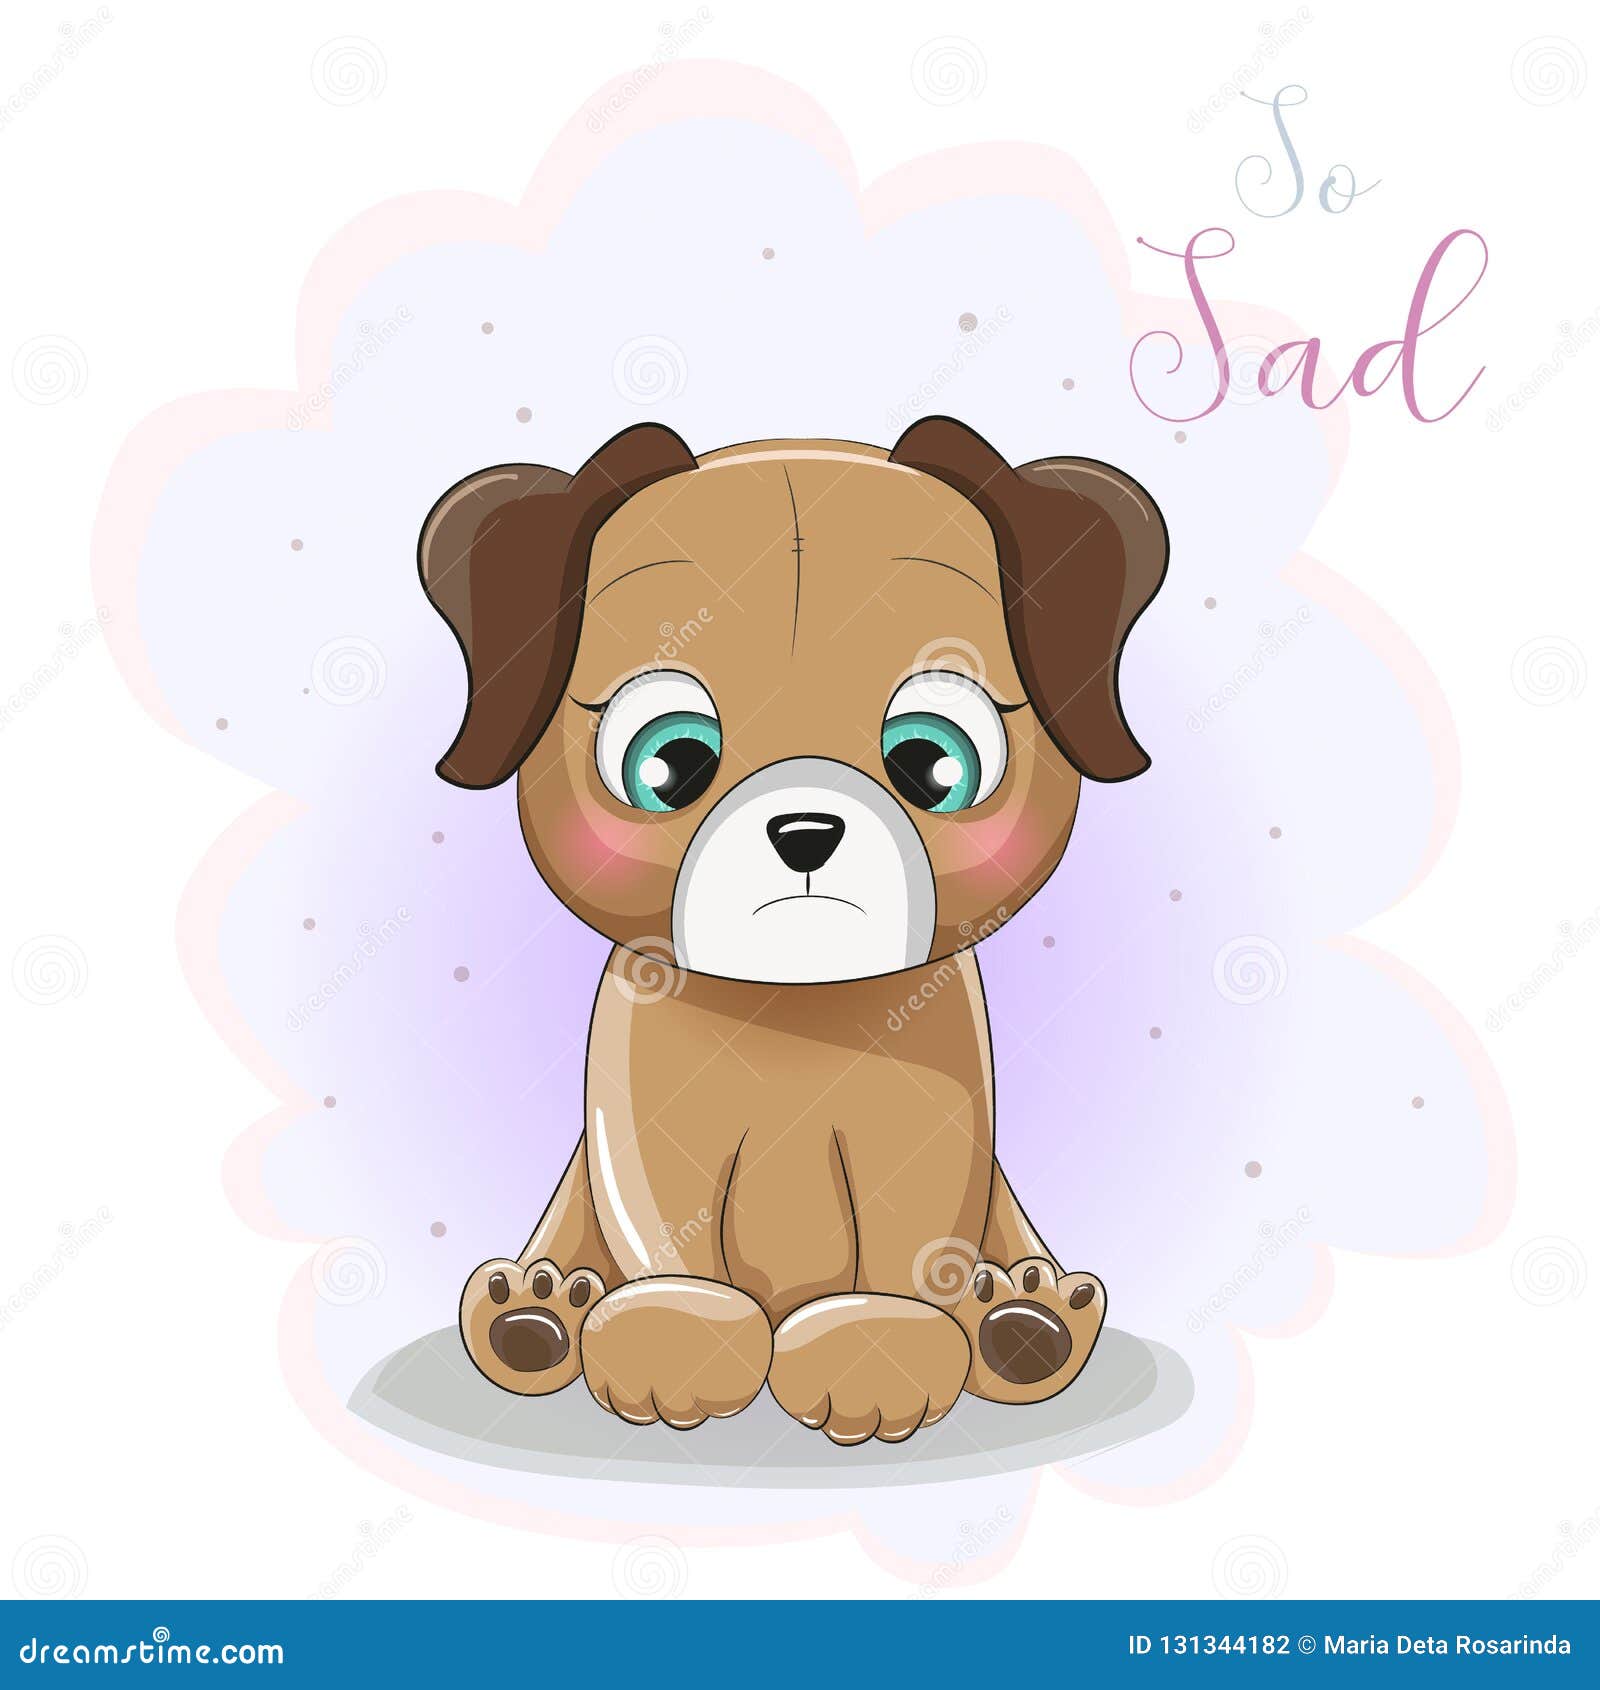 Cute cartoon puppy so sad stock vector. Illustration of cheerful - 131344182